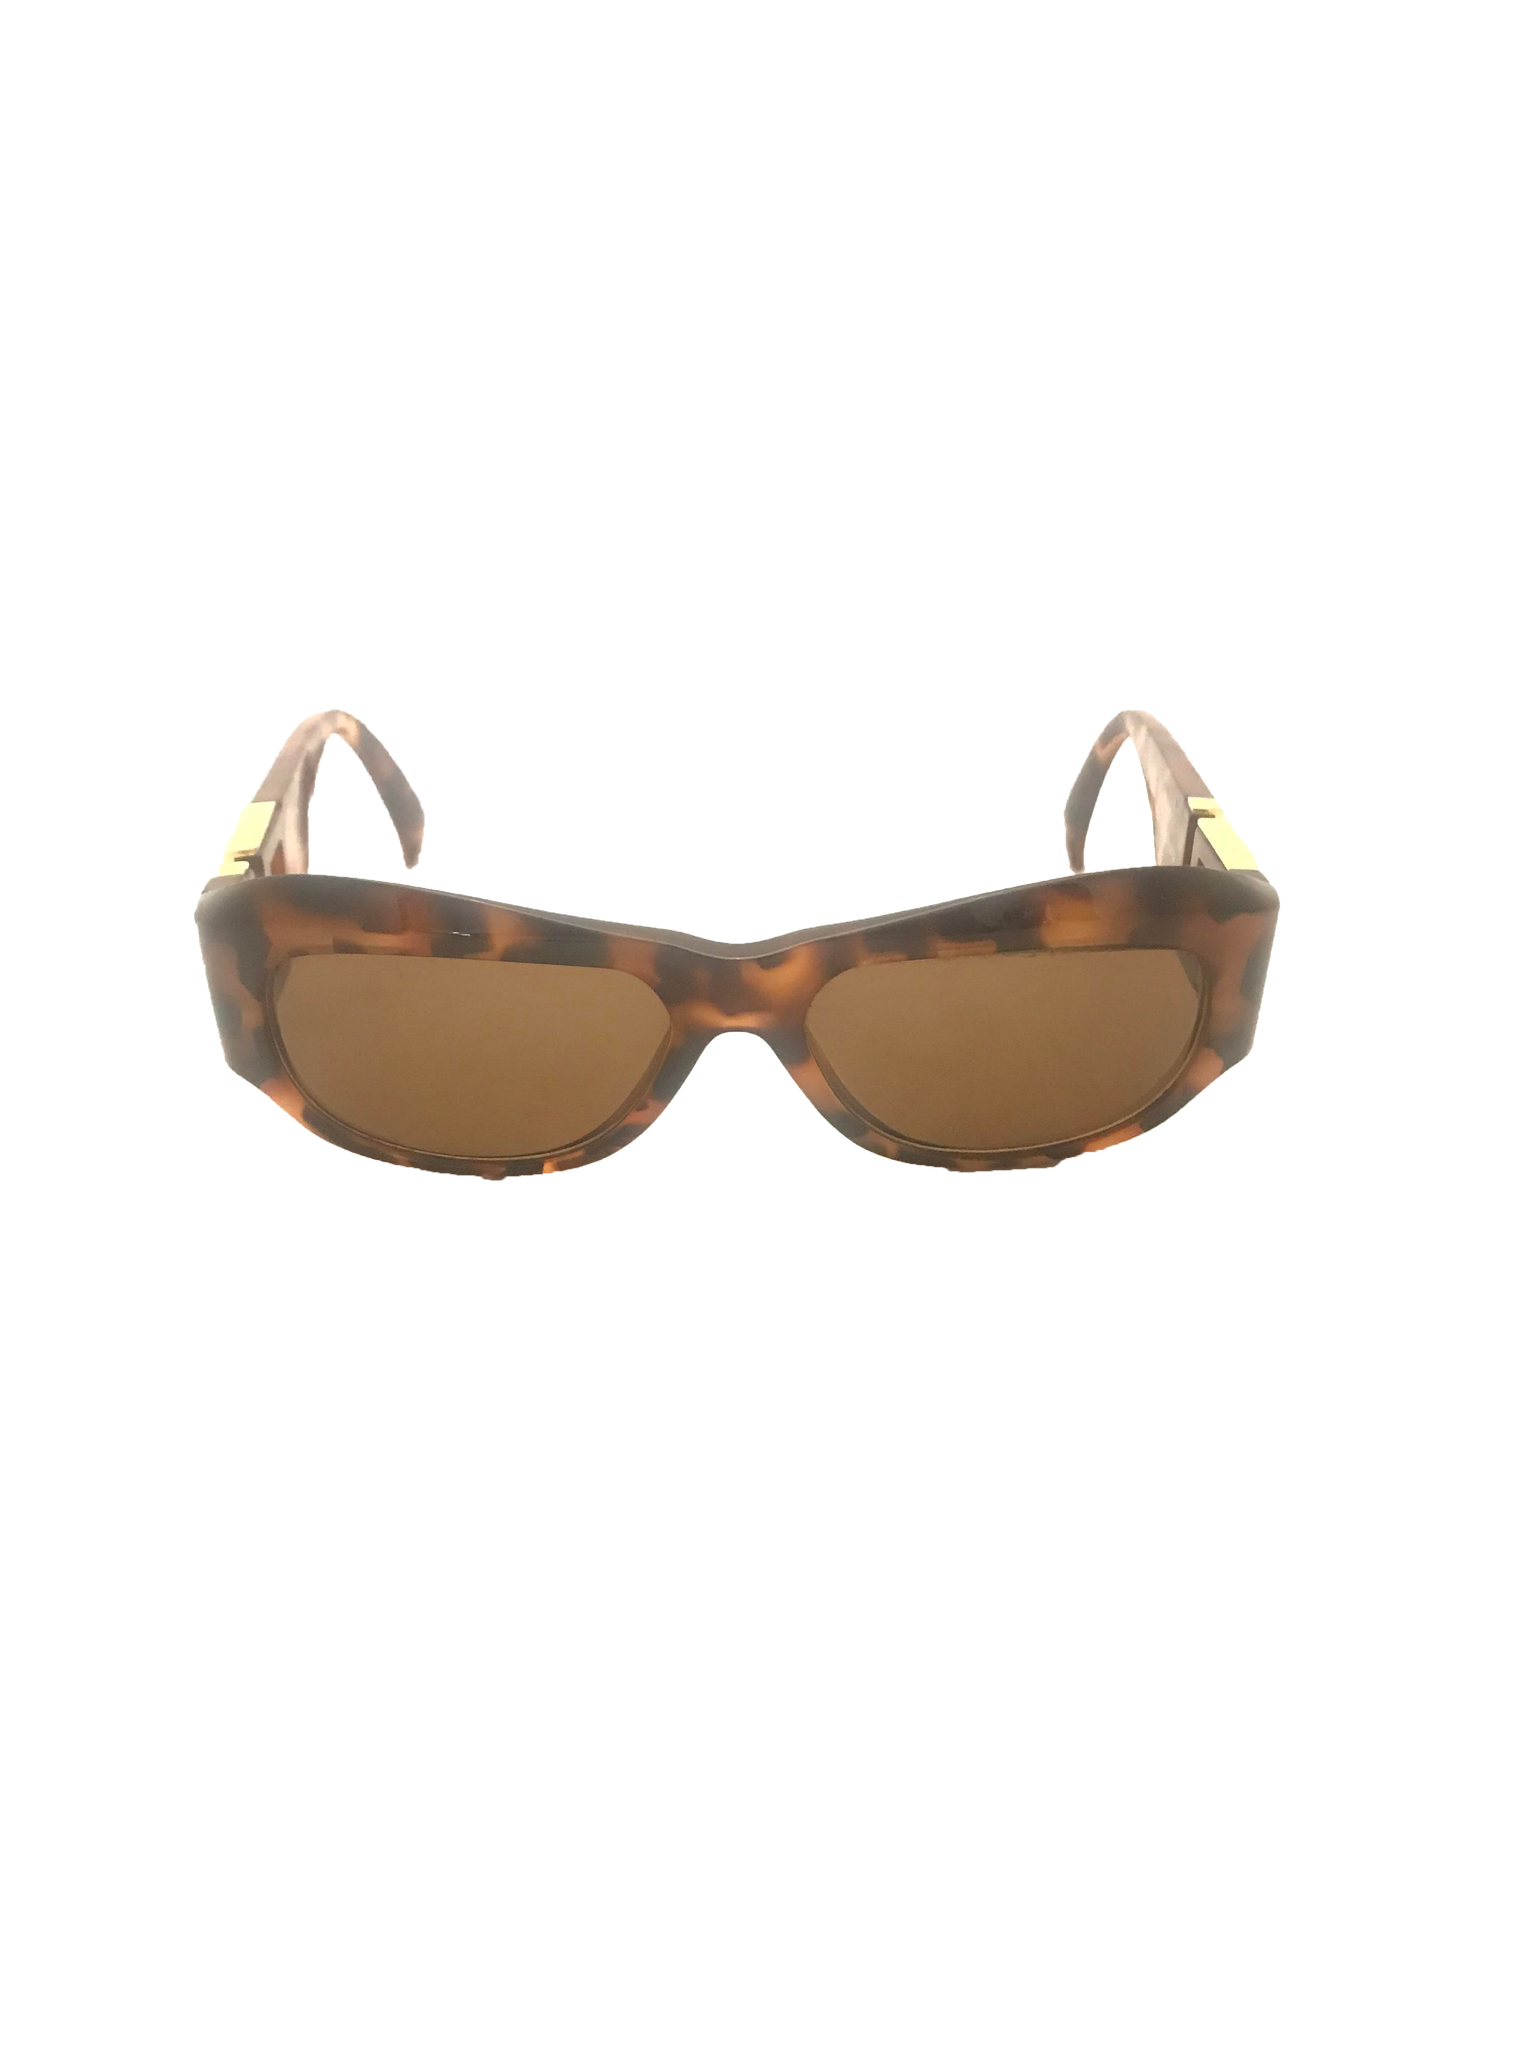 Vintage Tortoise Shell Sunglasses